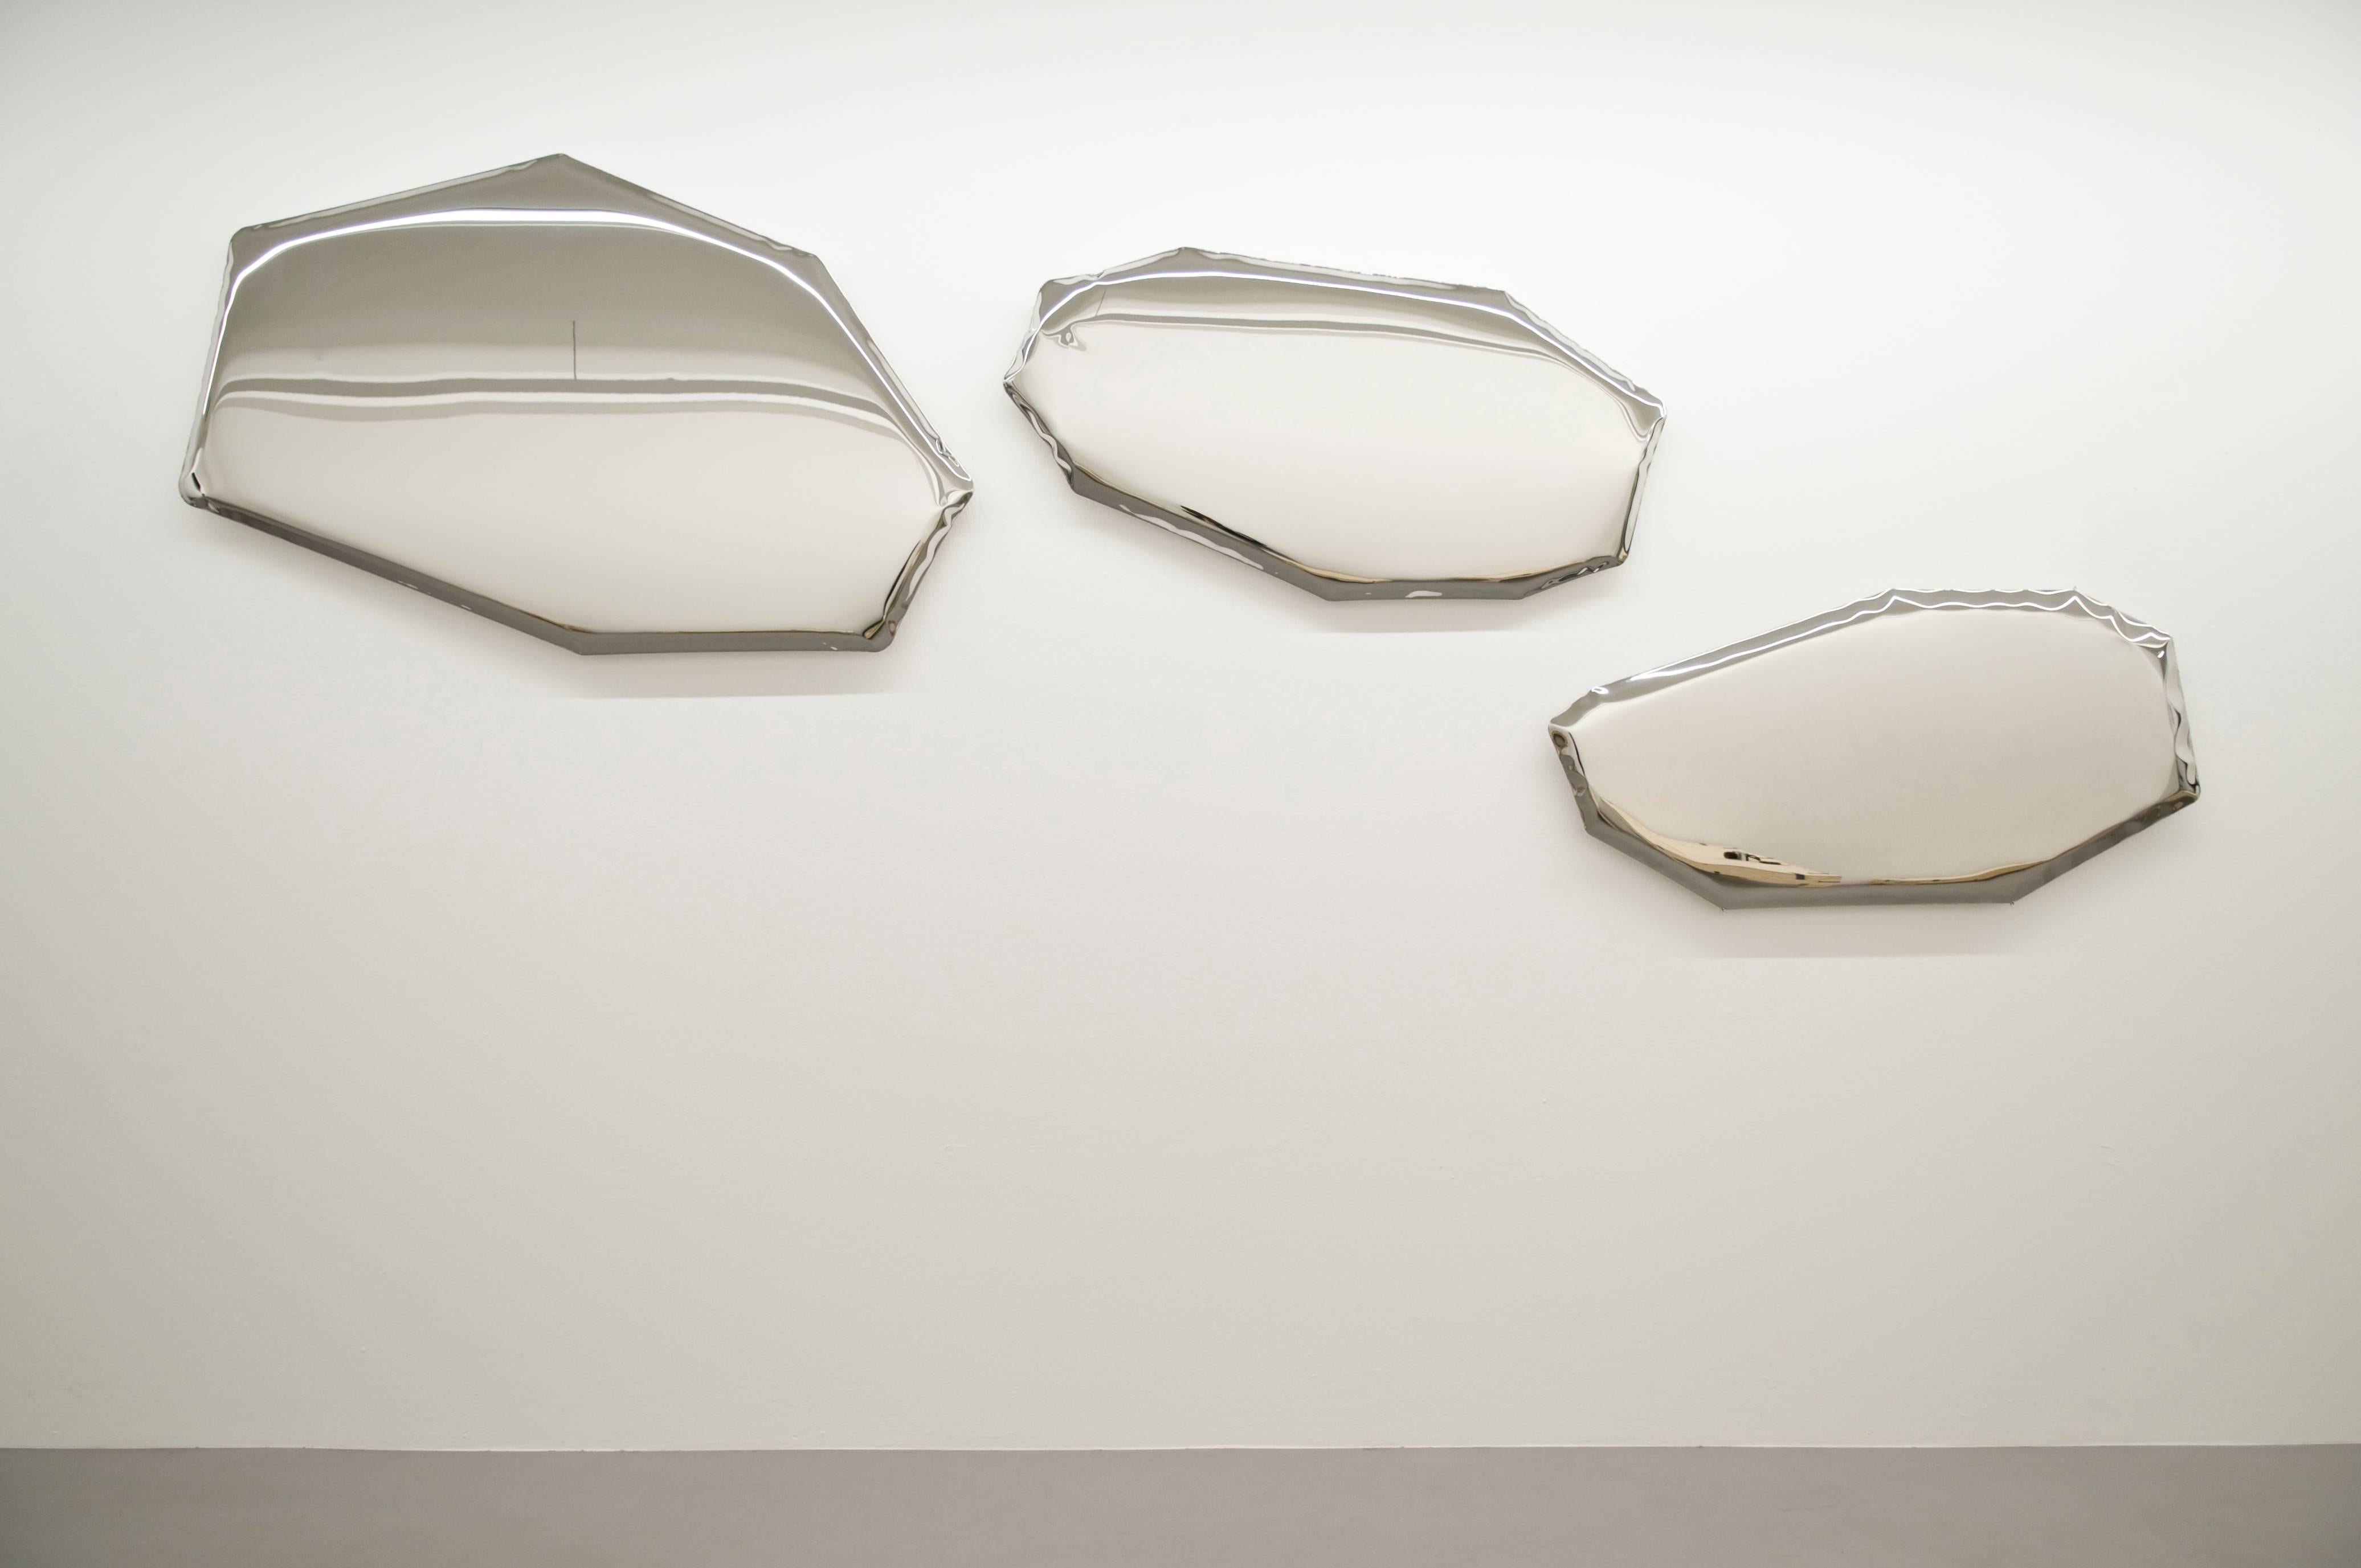 Minimalist Contemporary Mirror 'Tafla O4' in Stainless Steel by Zieta Prozessdesign